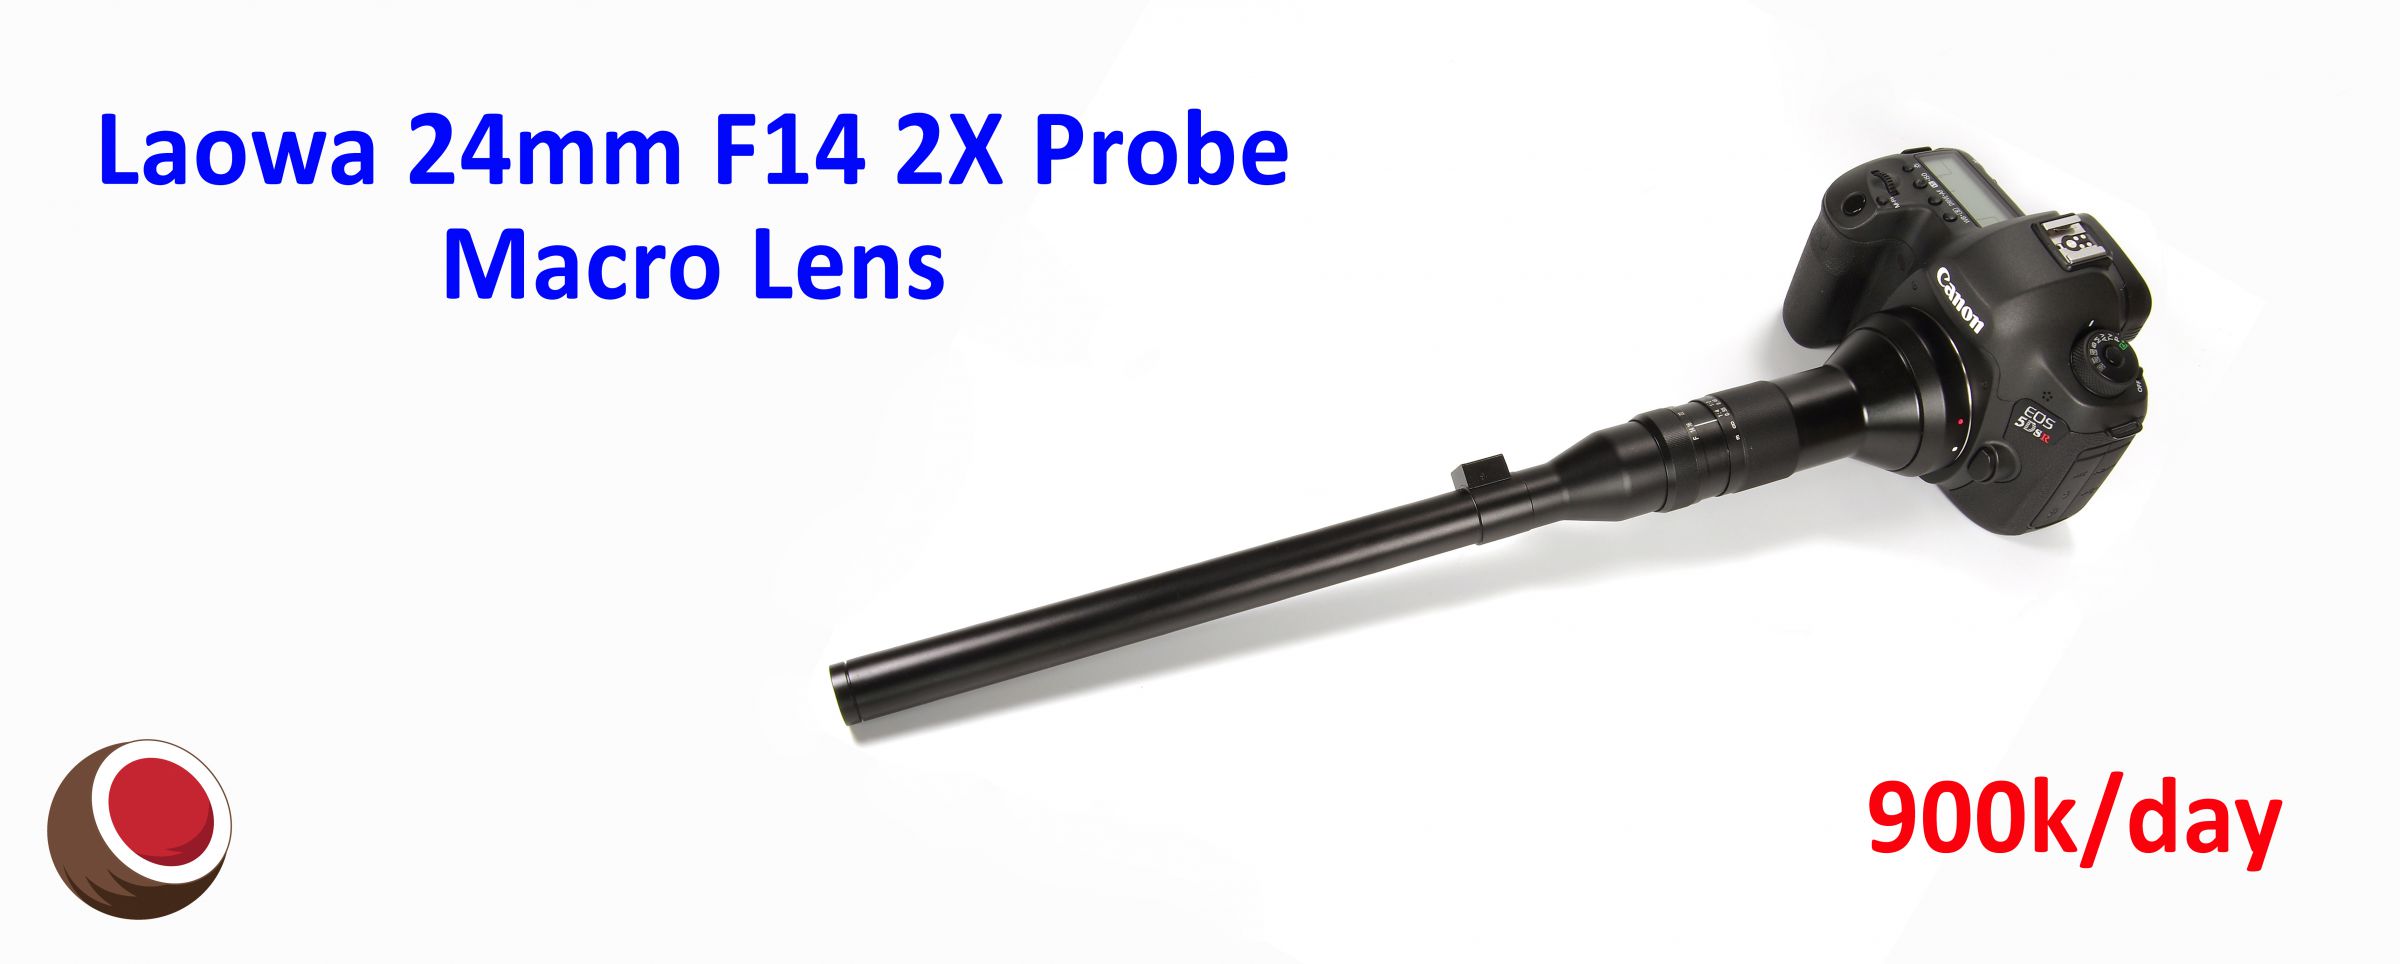 Laowa 24mm F14 2X Probe Macro Lens